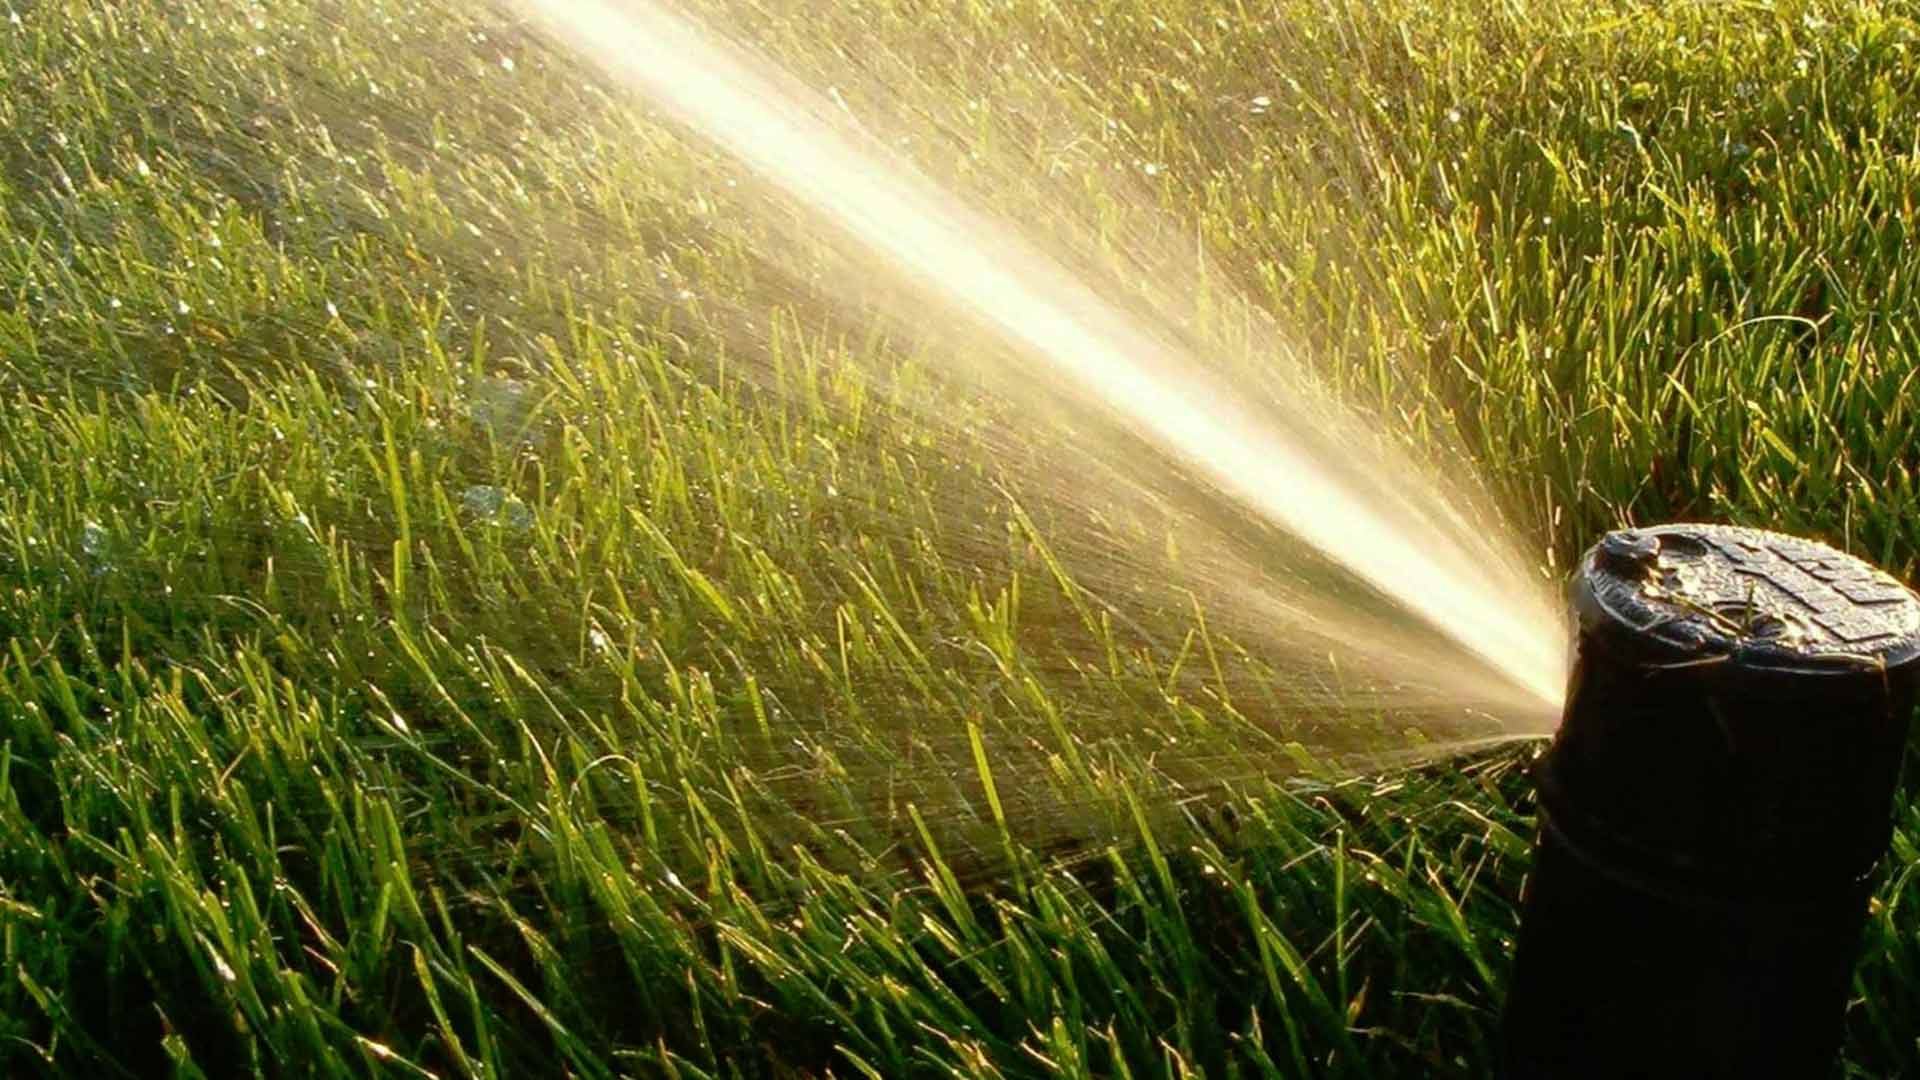 Yard Feeder Saves Water